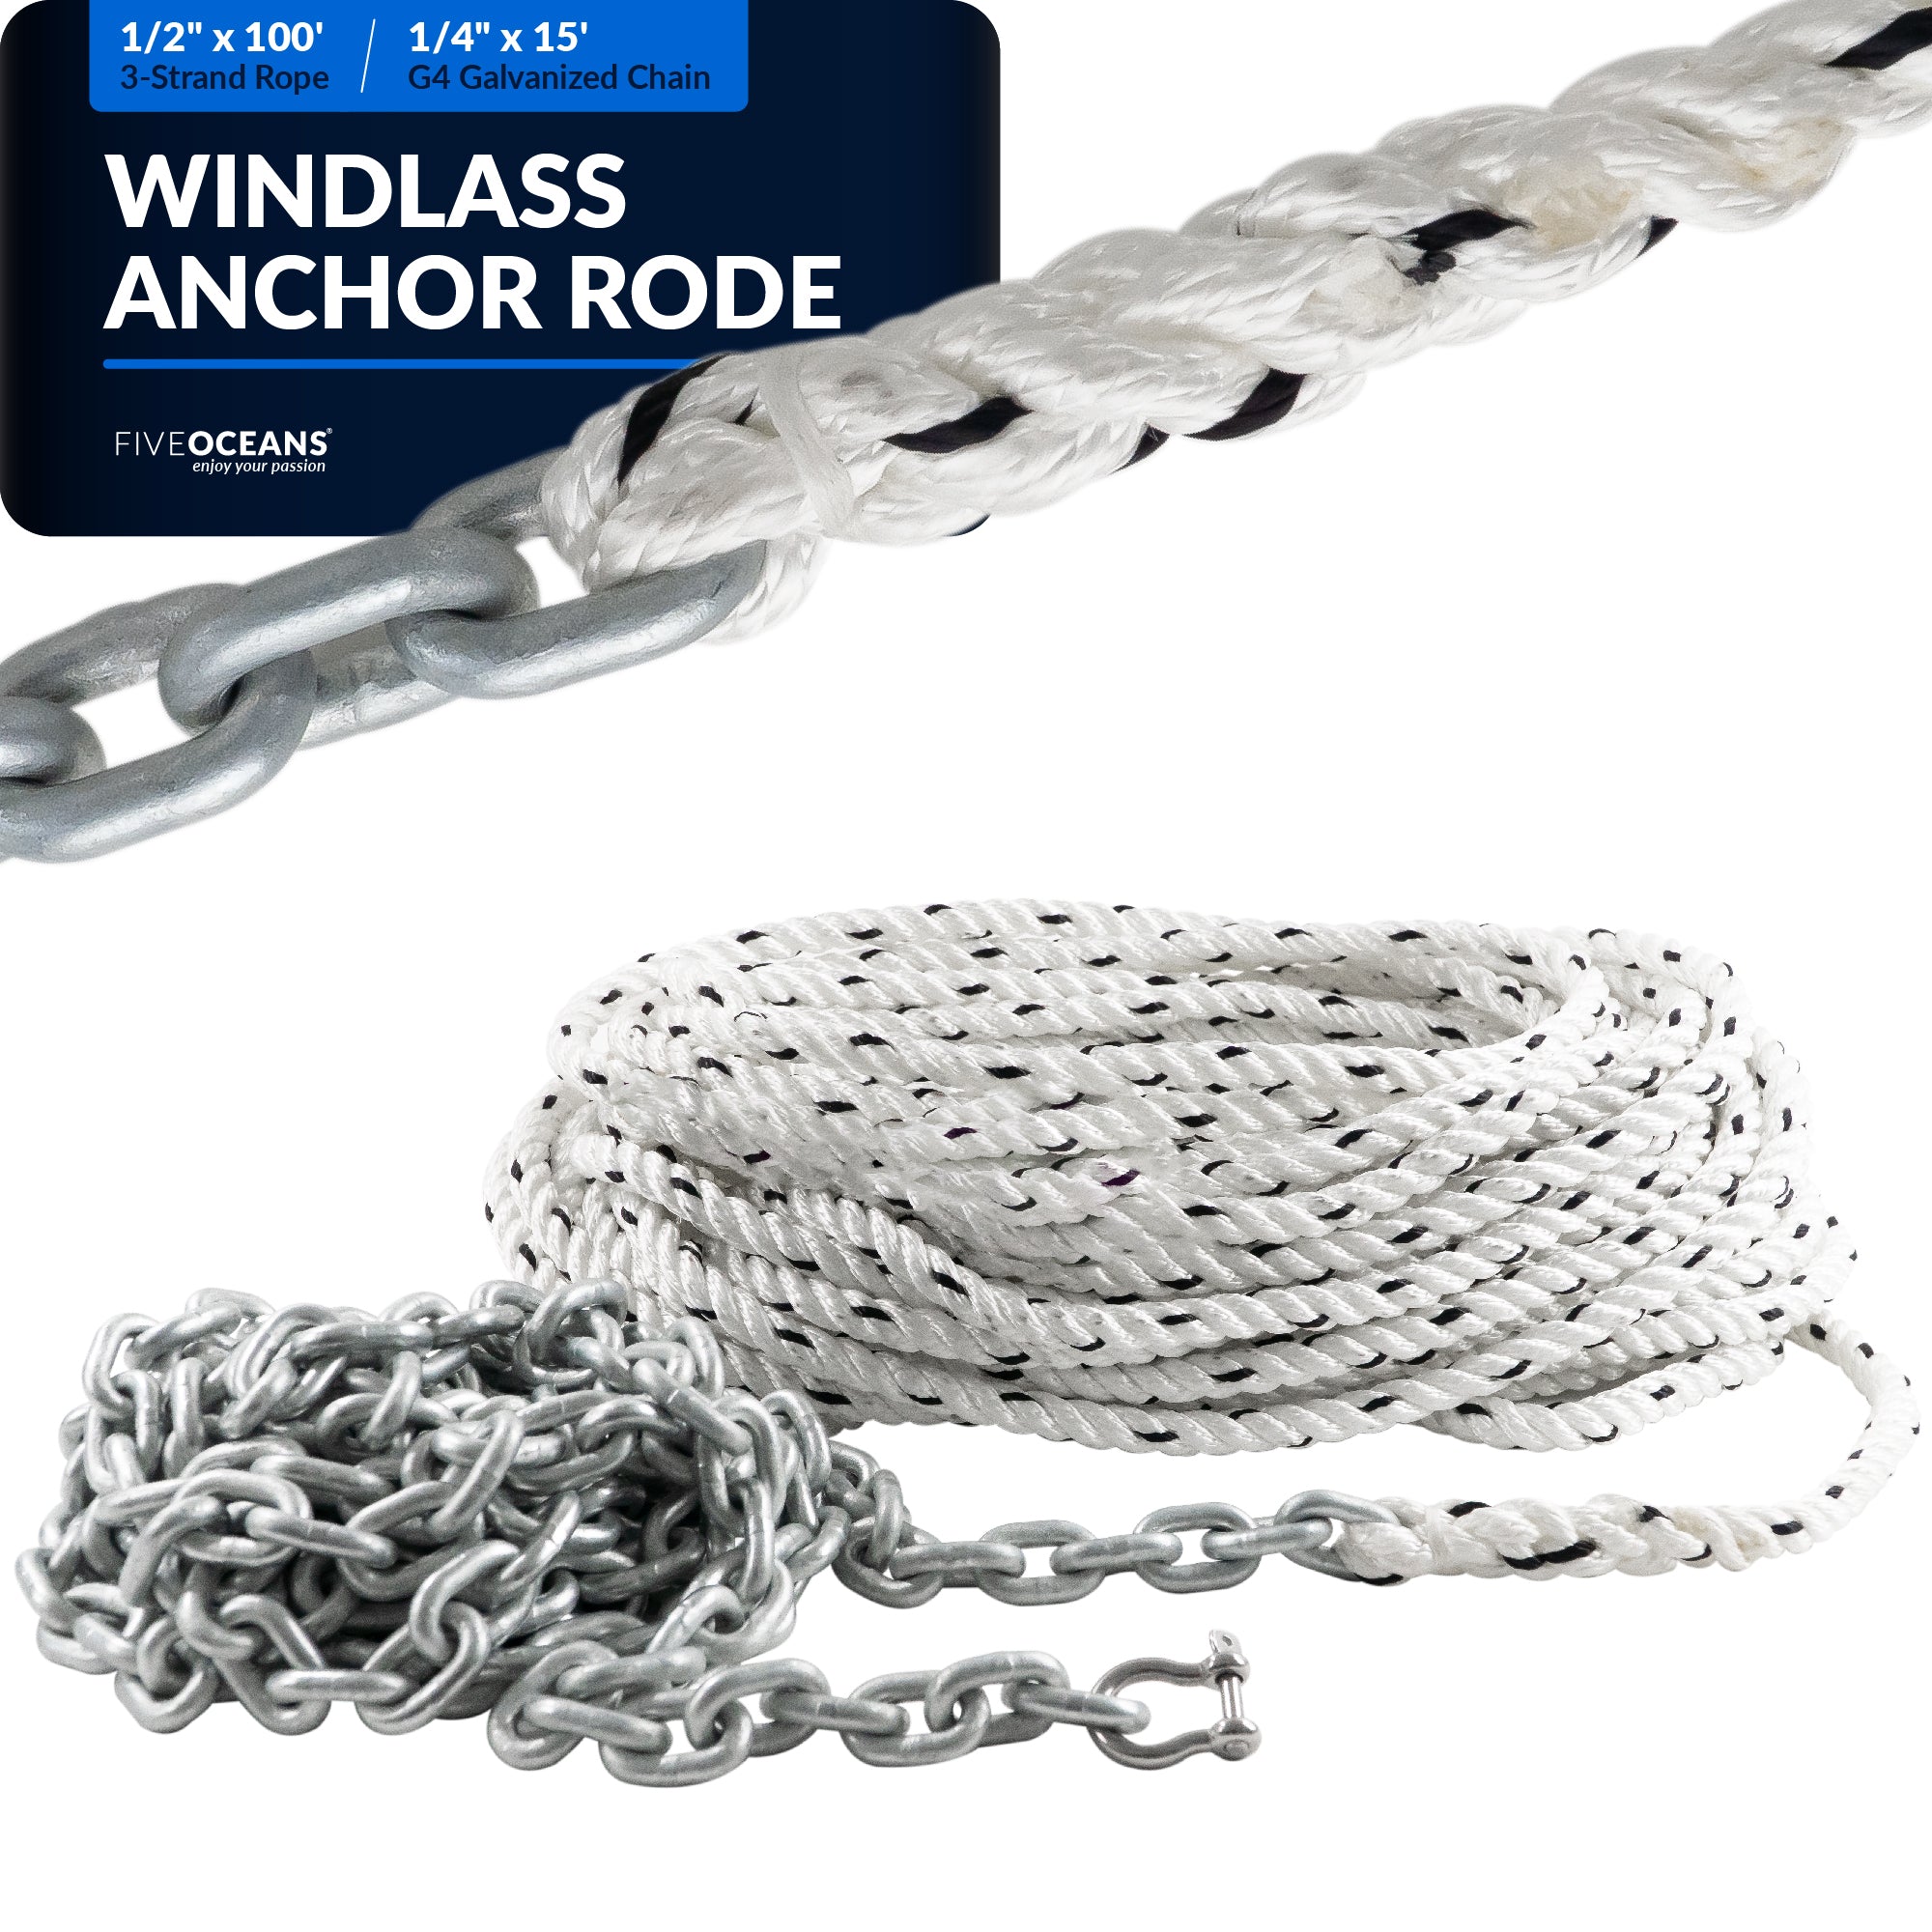 Windlass Anchor Rode, 1/2" x 100' Nylon 3-Strand Rope, 1/4" x 15' G4 Hot-Dipped Galvanized Steel Chain - FO4286